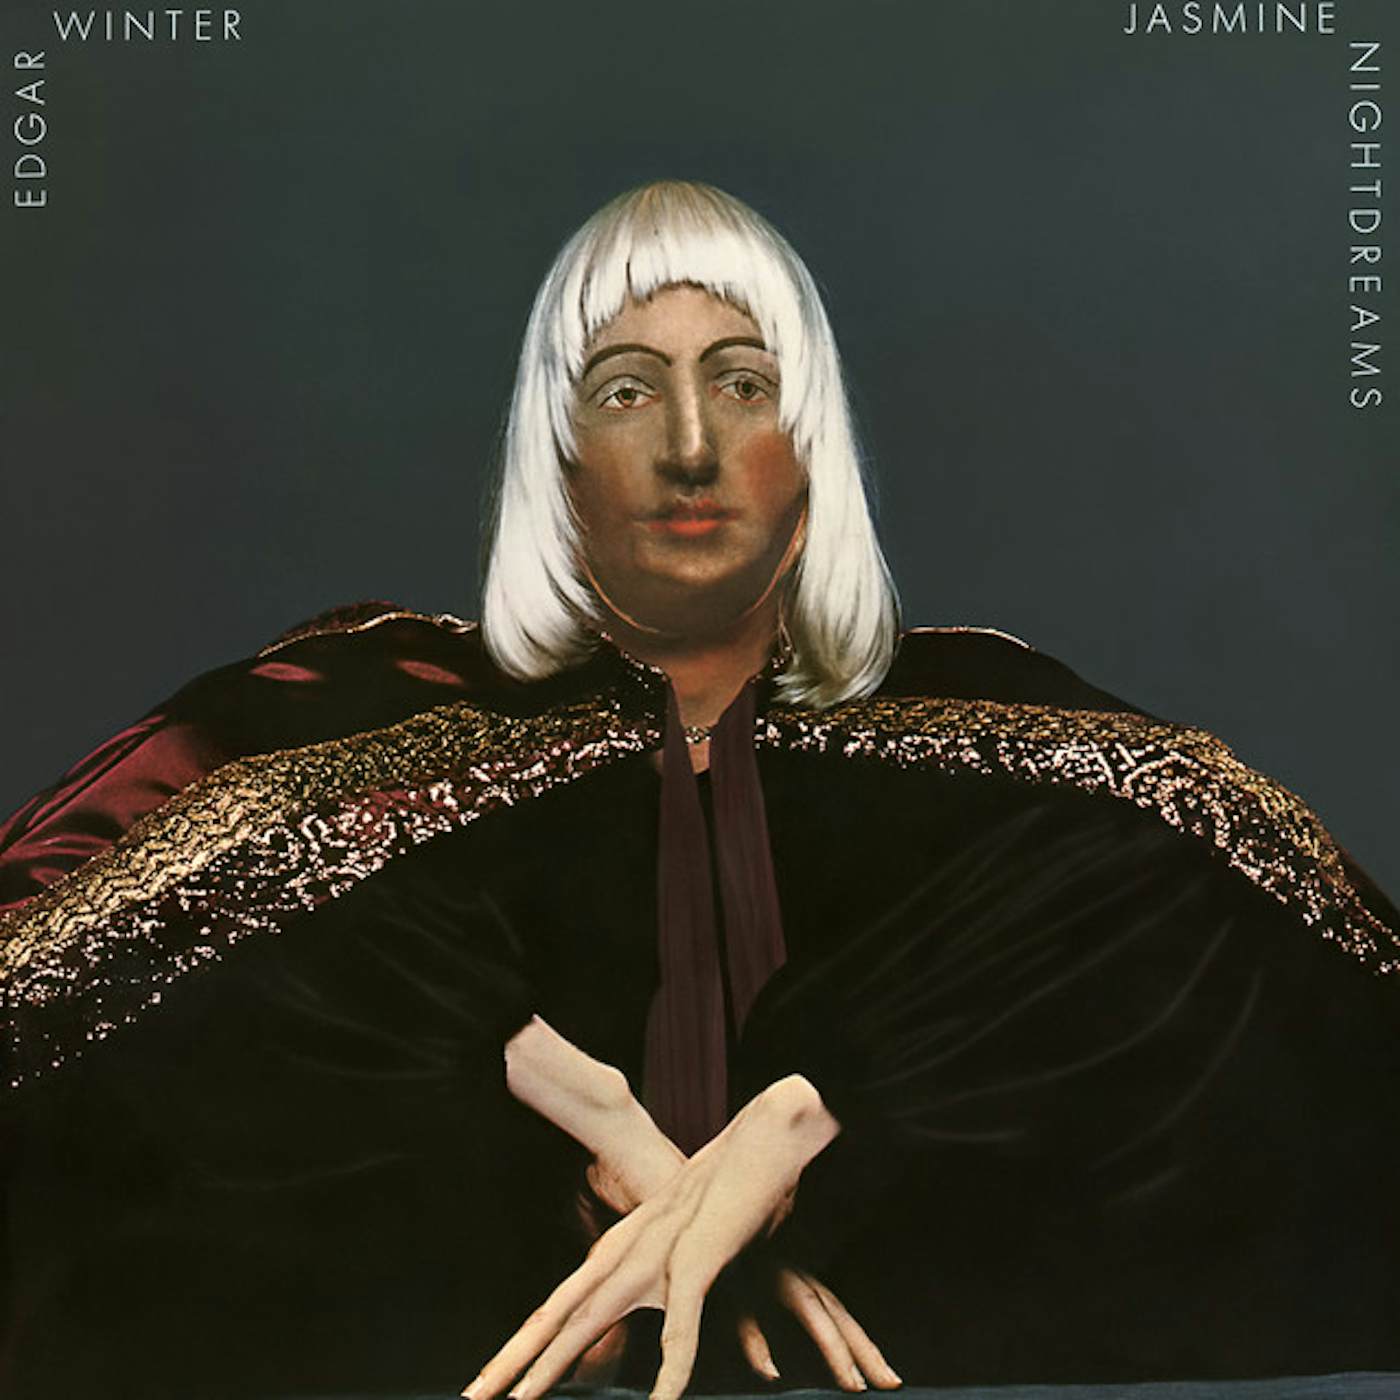 Edgar Winter JASMINE NIGHTDREAMS CD